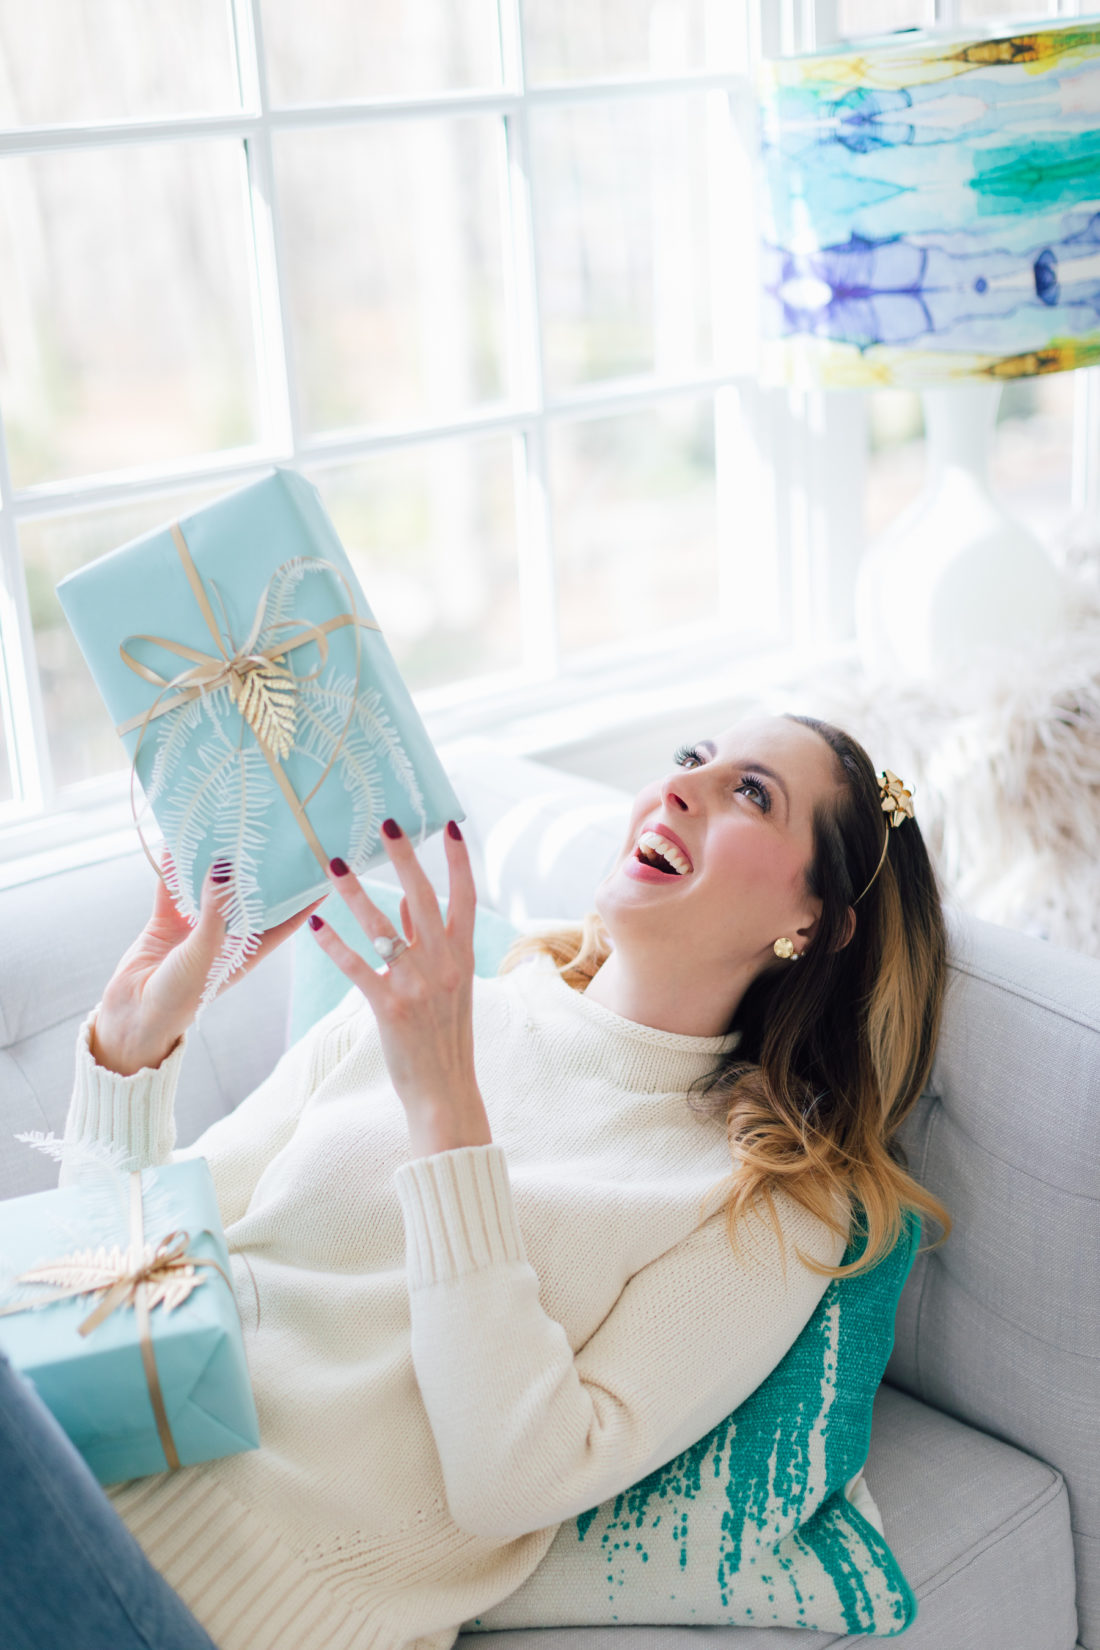 Eva Amurri Martino shares her Holiday Gift Guides for 2018!